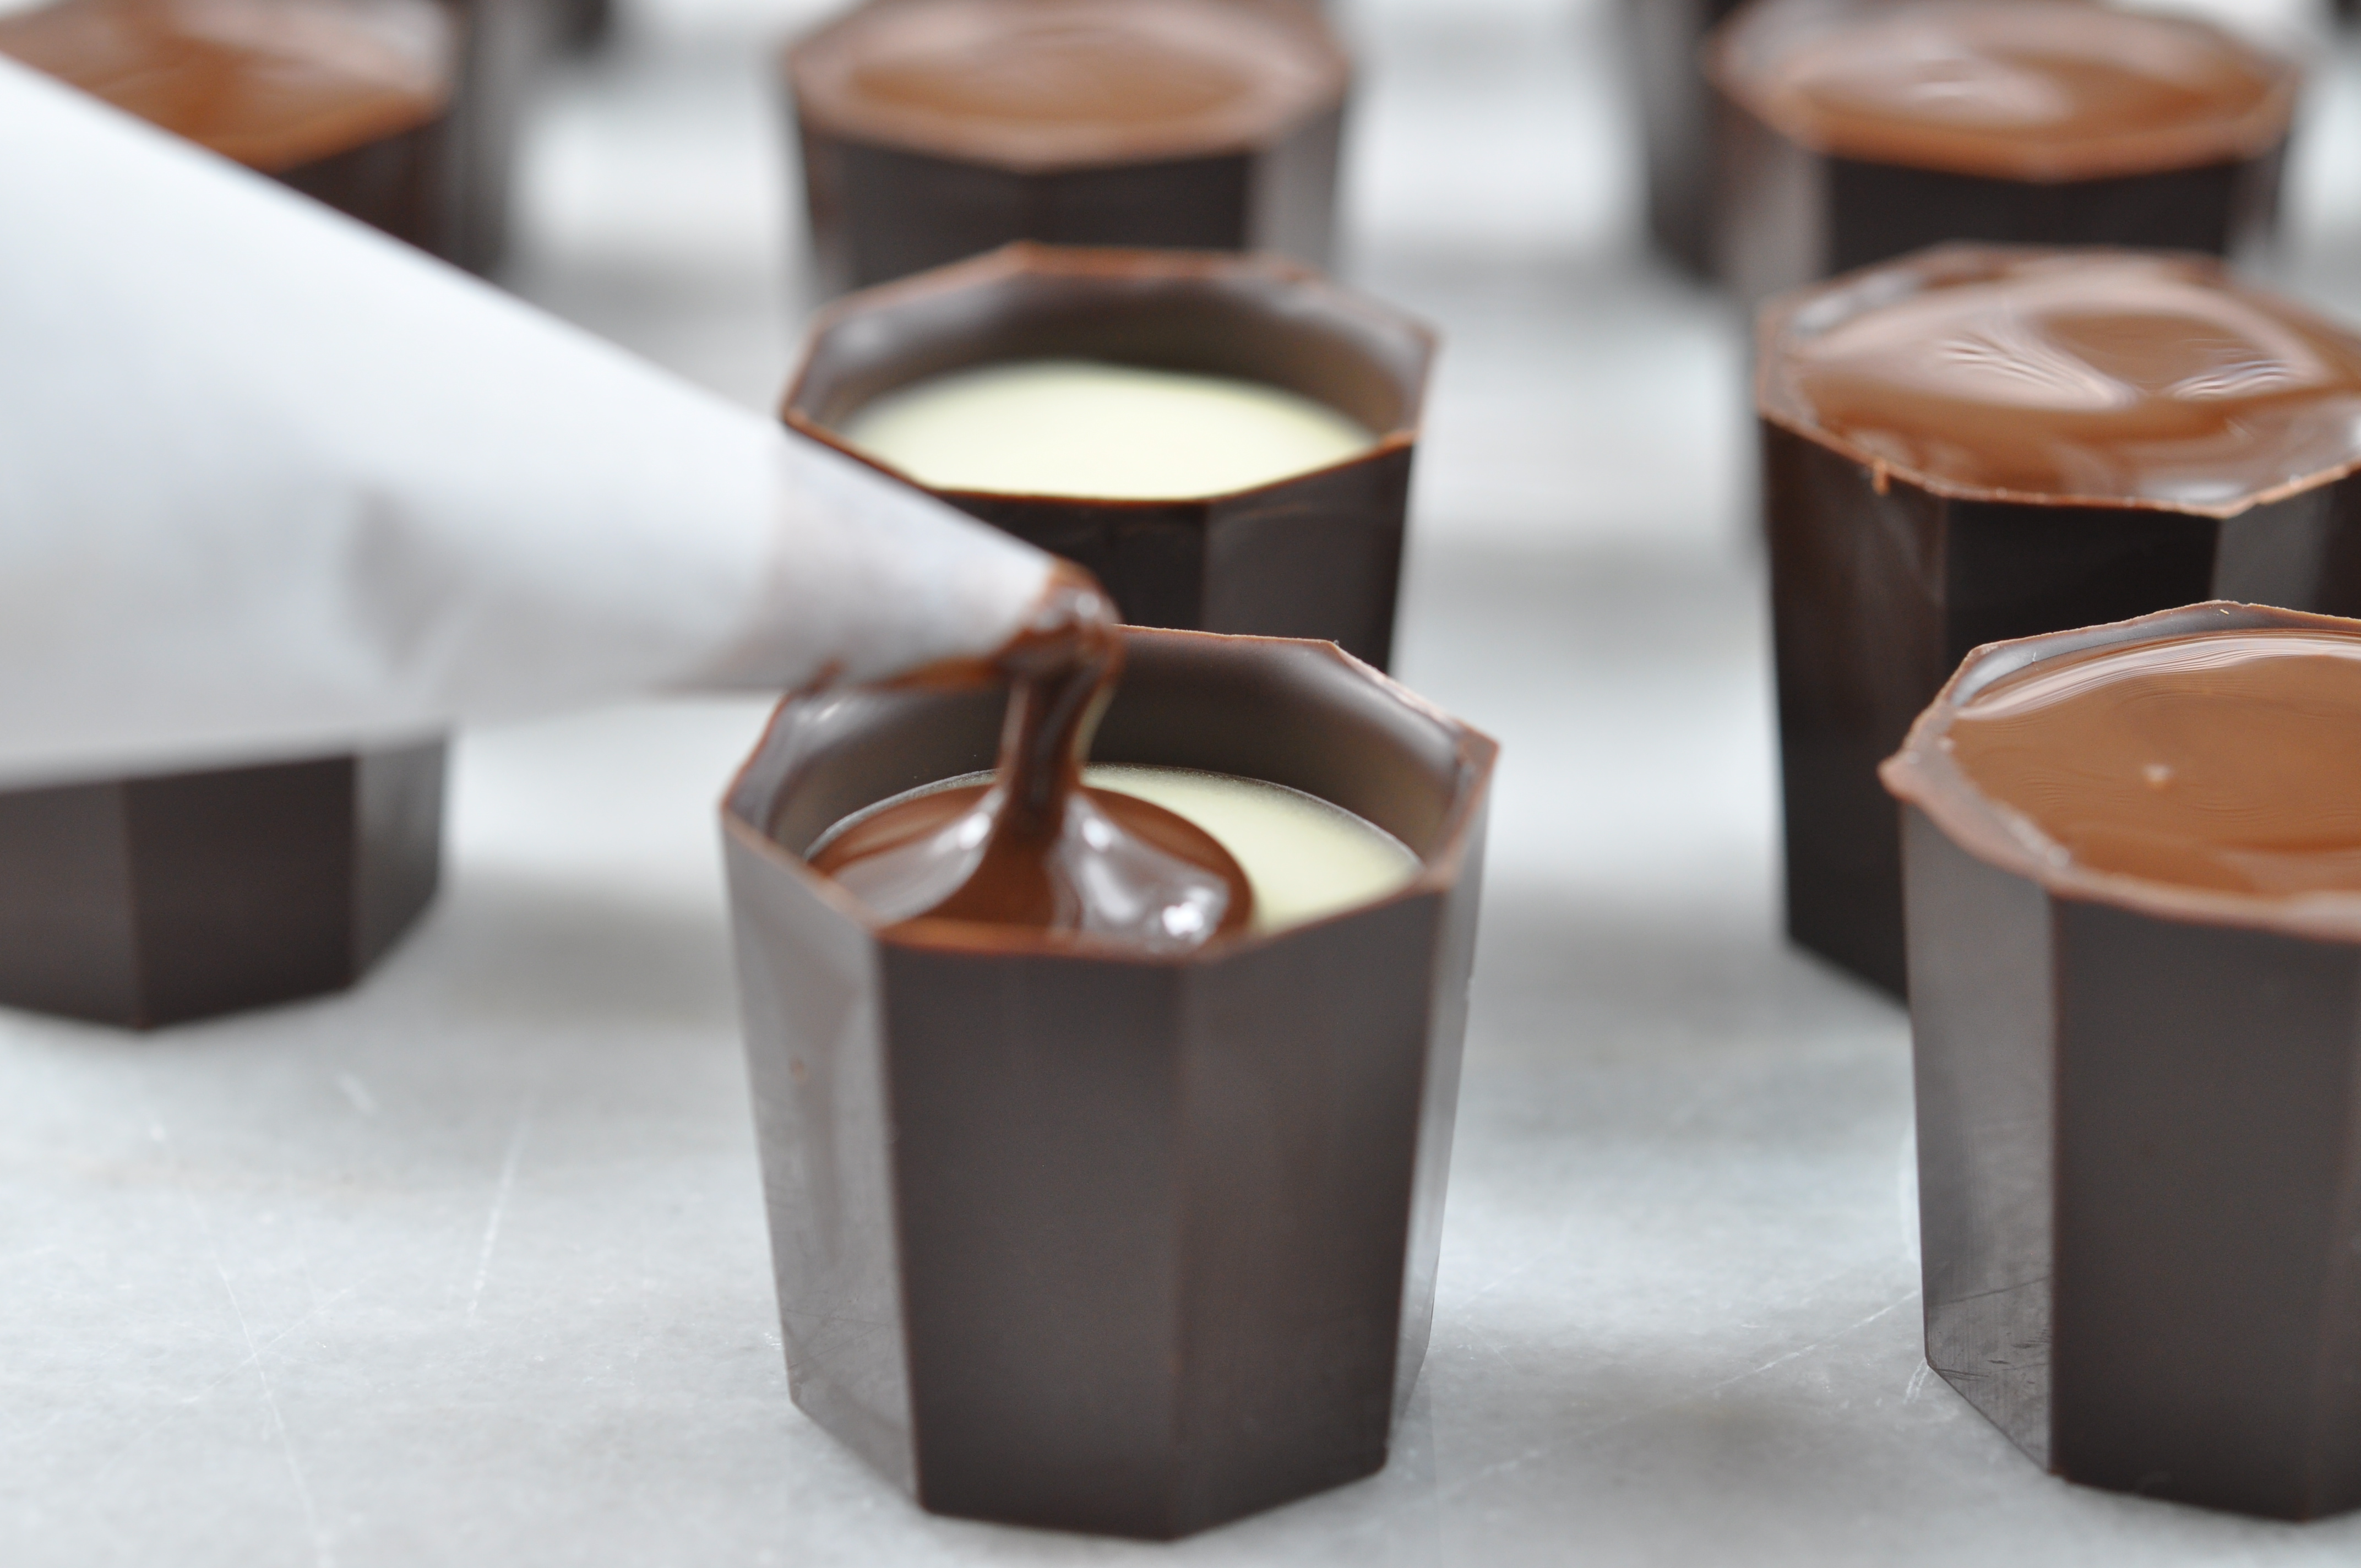 Chocolate cups. Жидкий шоколад. Форма для шоколада. Формы для шоколадных конфет. Шоколадные стопки.